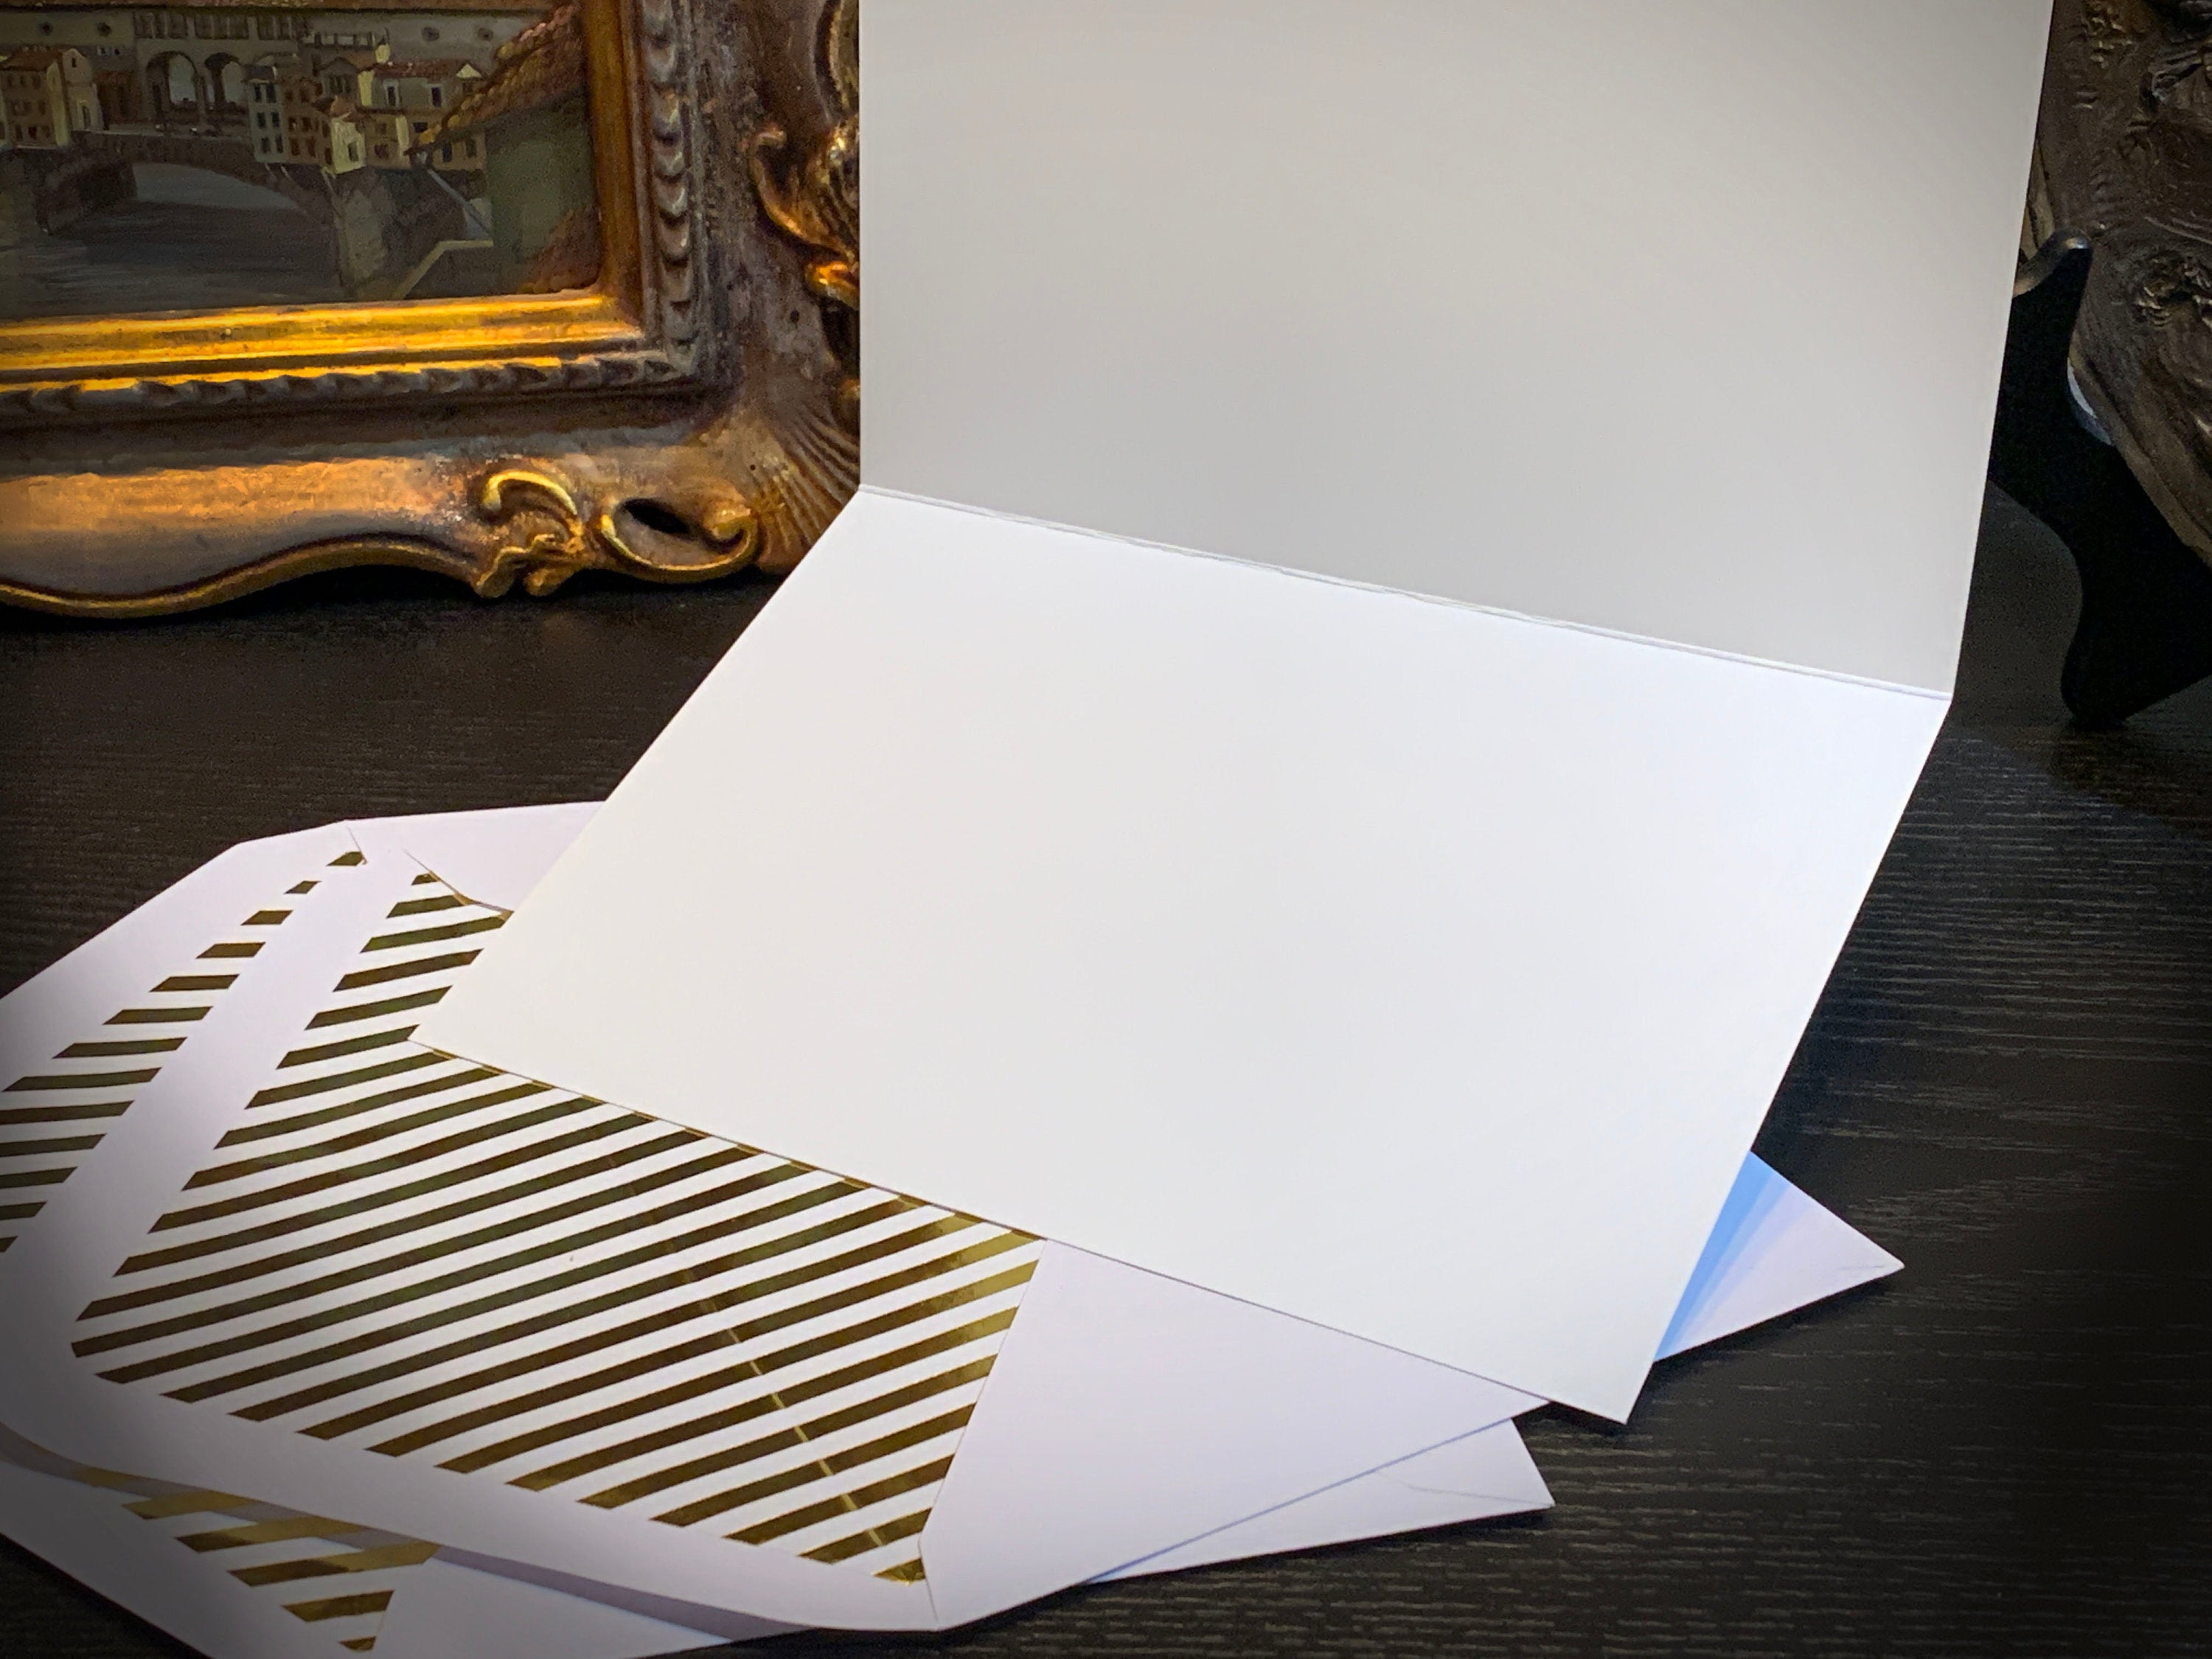 Peacock by Theodorus van Hoytema, Greeting Card with Elegant Striped Gold Foil Envelope, 1 Card/Envelope